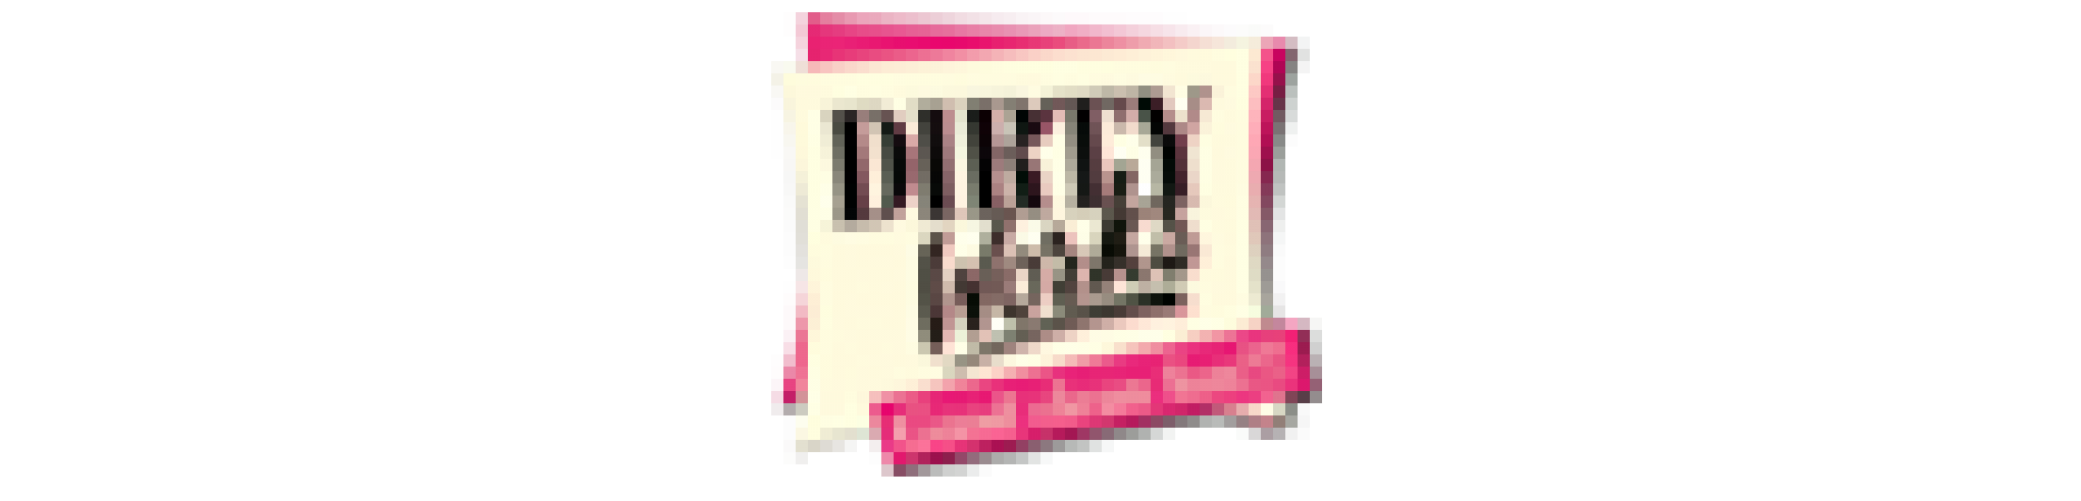 dirty-works-logo